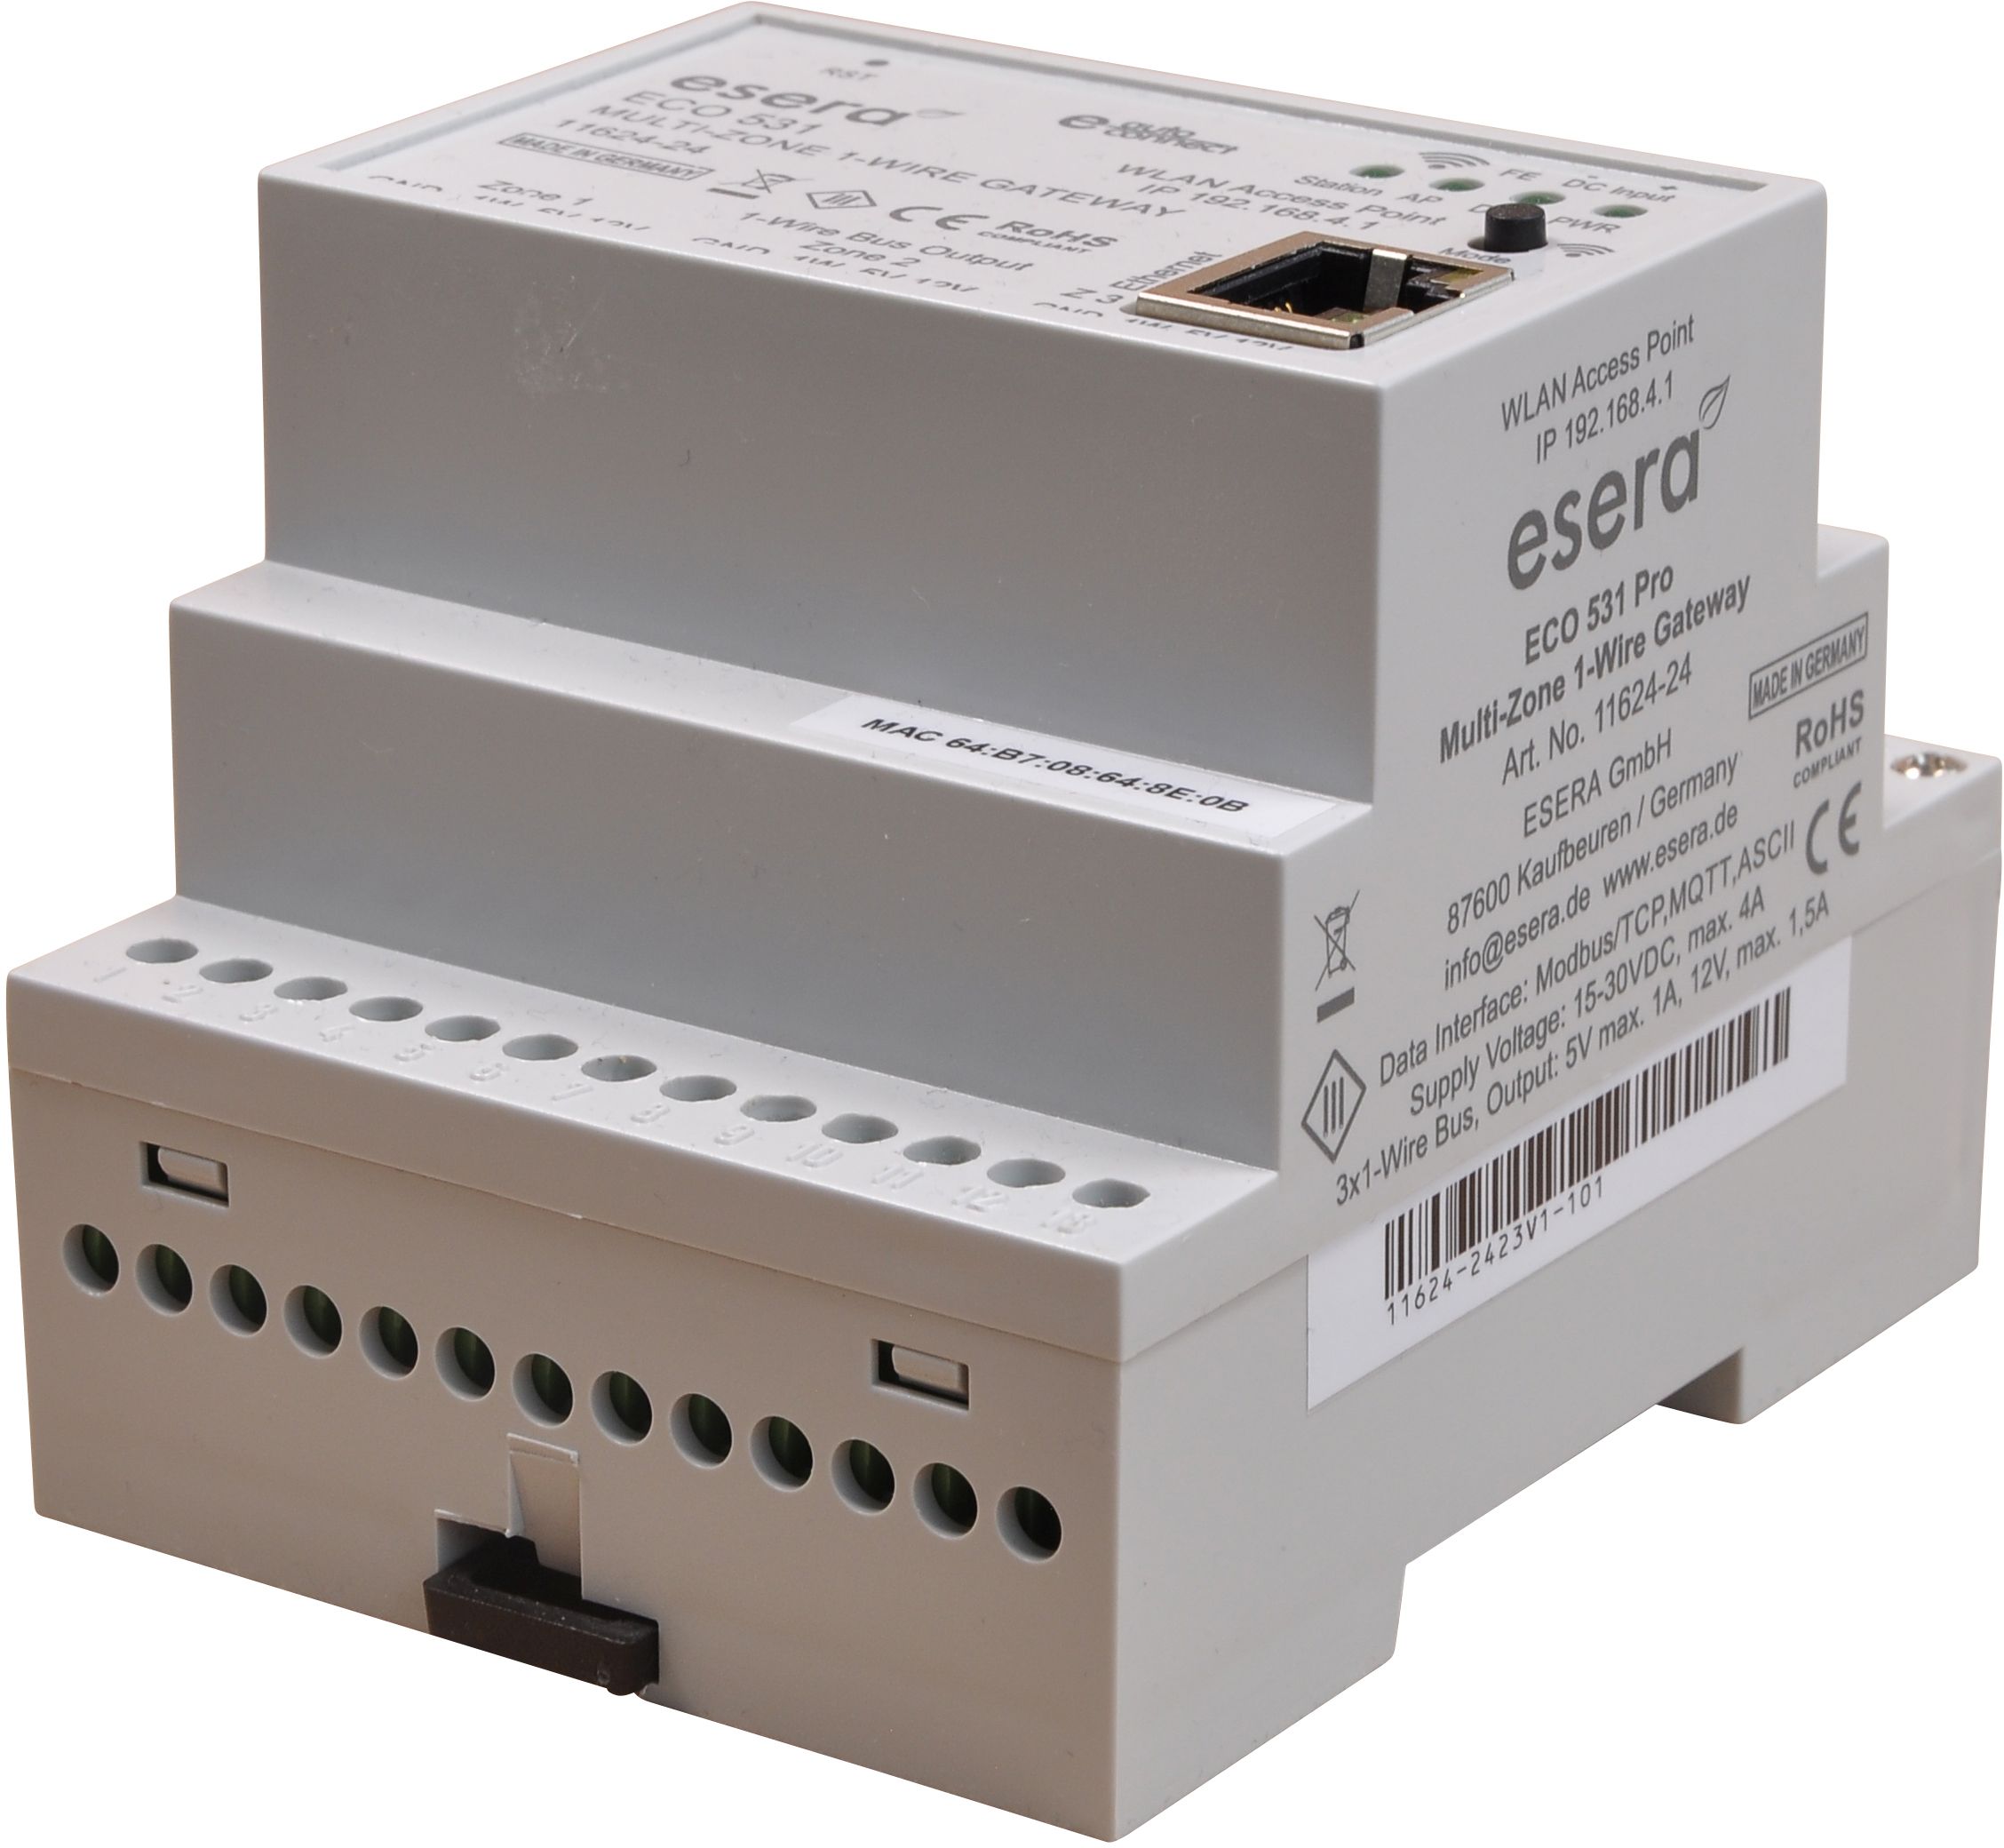 ECO 531 Central Unit Industrial Multizone 1-Wire Sensor-Actor-Gateway